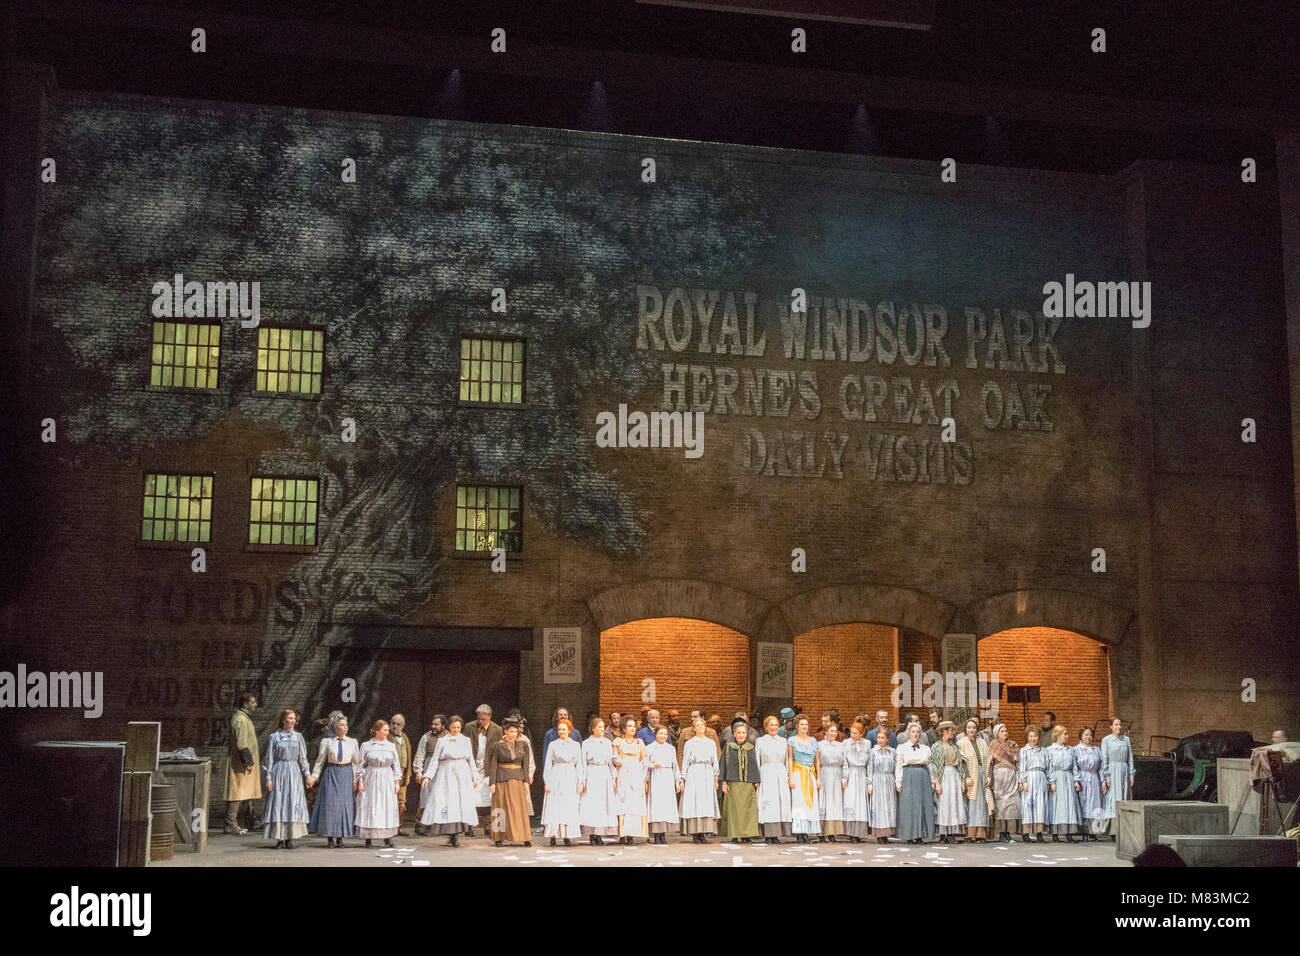 Curtain Call per verdiano Falstaff, Opera Bastille, Parigi, Francia Foto Stock